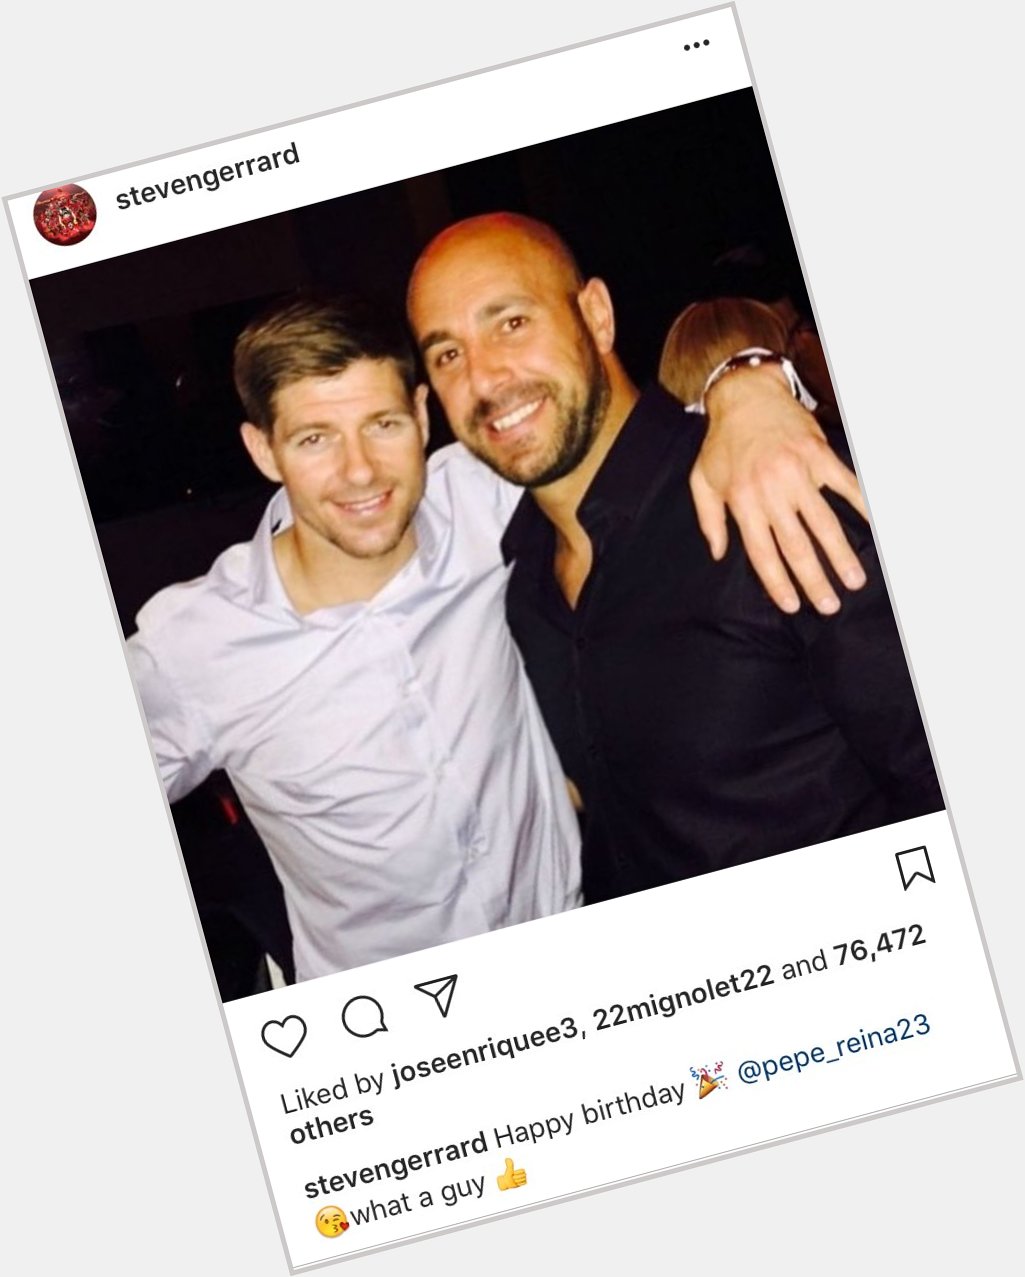 LFCFansCorner: Gerrard on Instagram, saying happy birthday to Pepe Reina! 